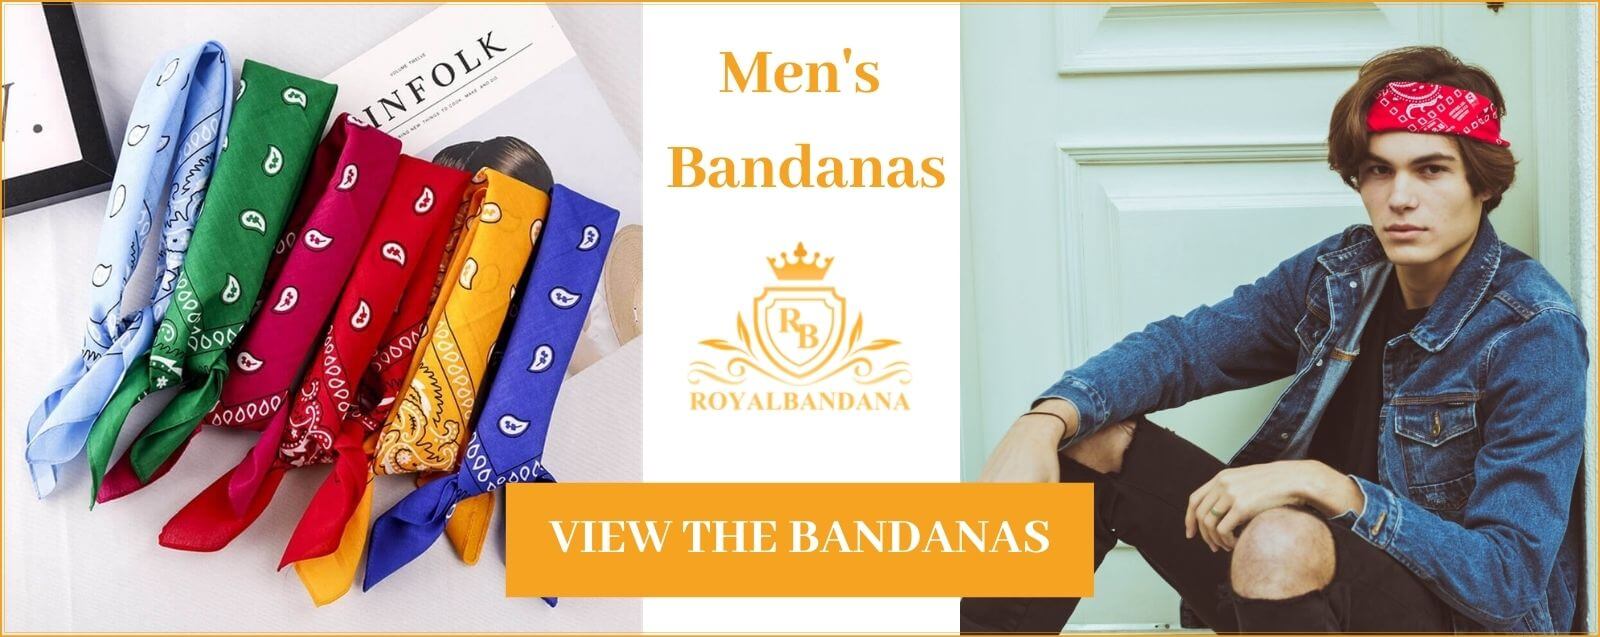 see royalbandana men's bandanas collection